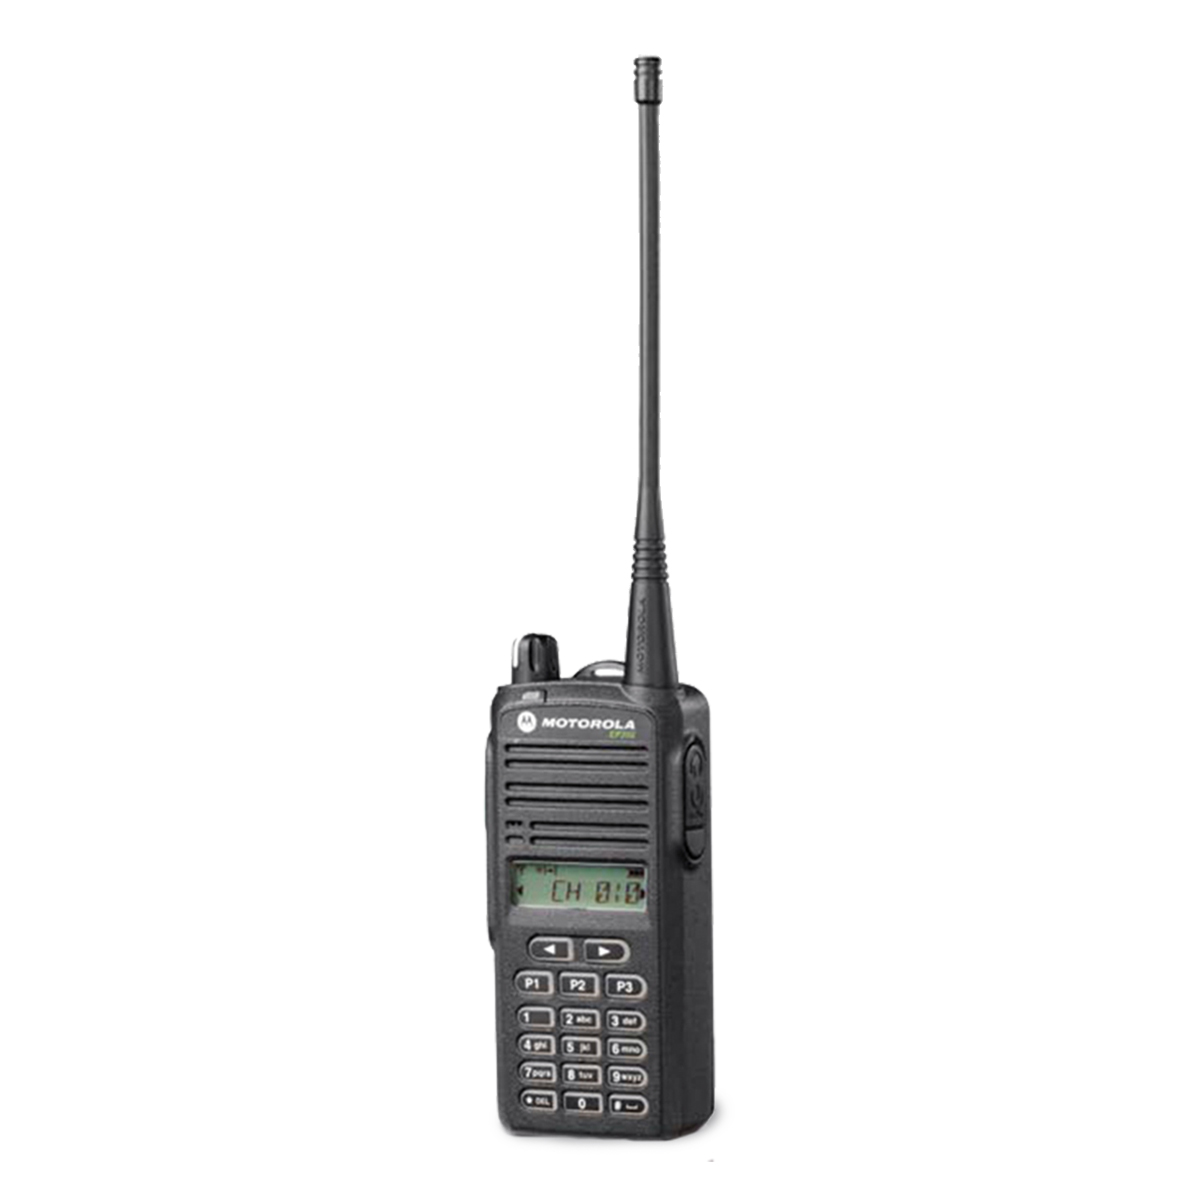 Radio Motorola EP350 MX Analógico LAH03RDK8AB9AN UHF 435-480 MHz con Pantalla y Teclado Completo